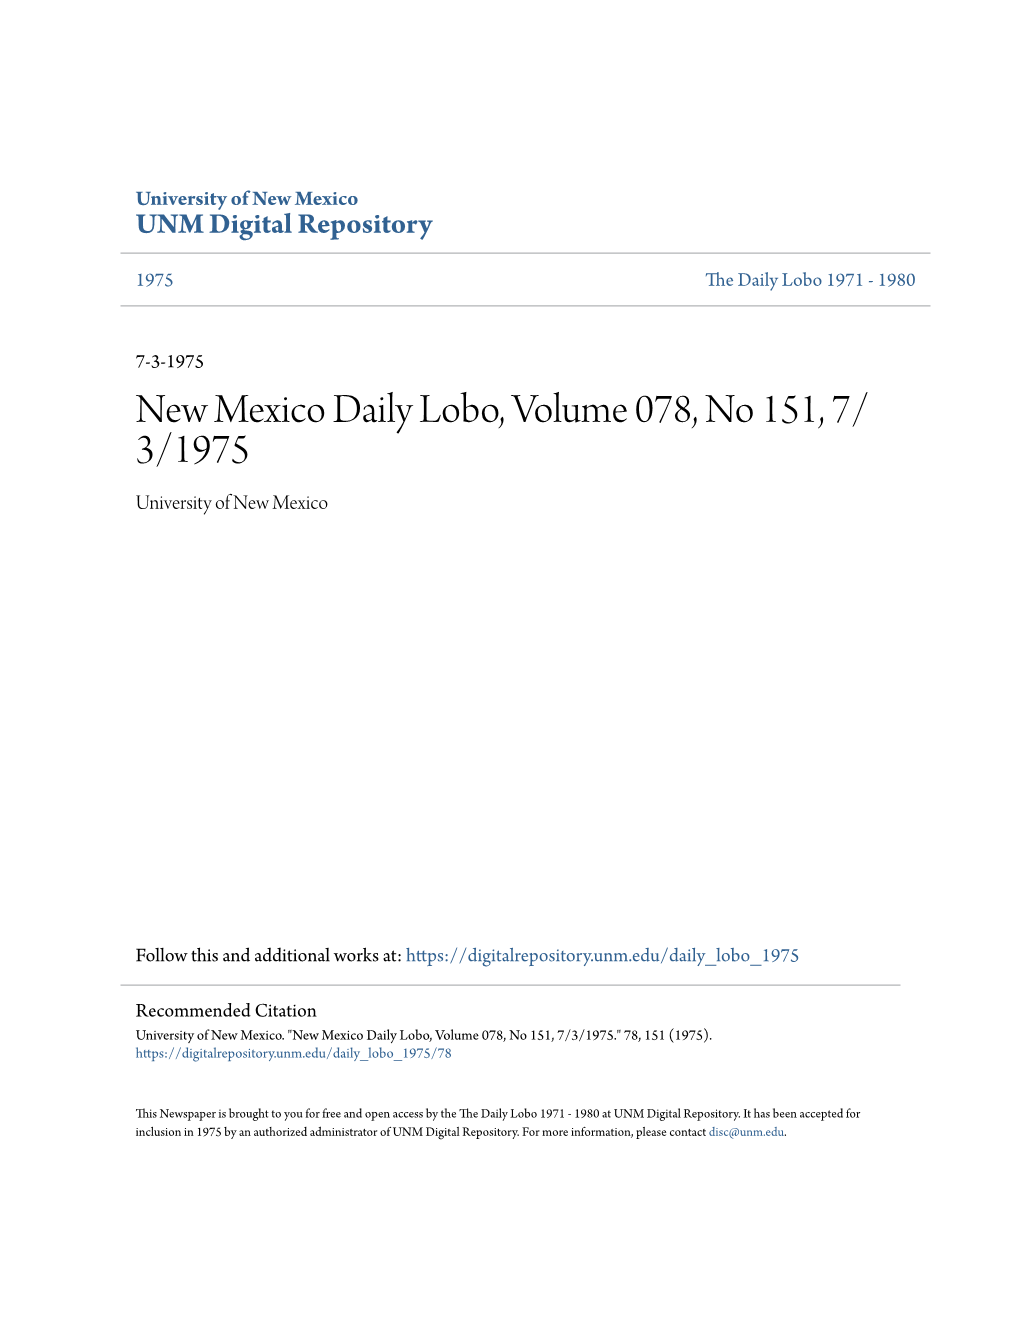 New Mexico Daily Lobo, Volume 078, No 151, 7/3/1975." 78, 151 (1975)